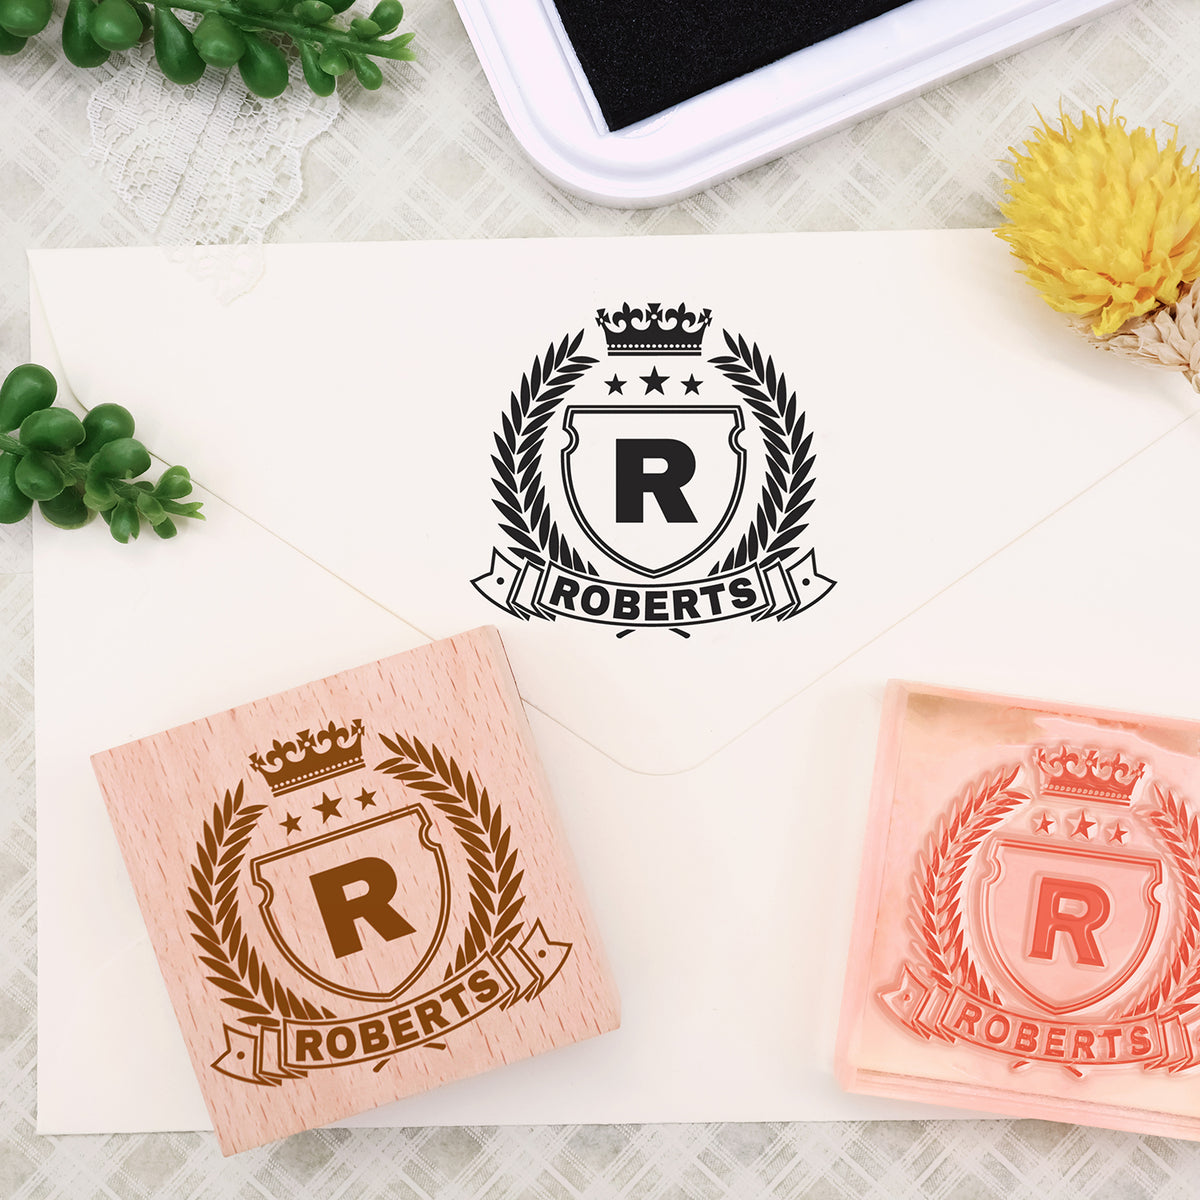 Custom Family Crest Rubber Stamp (18 Designs) -Rubber Seals